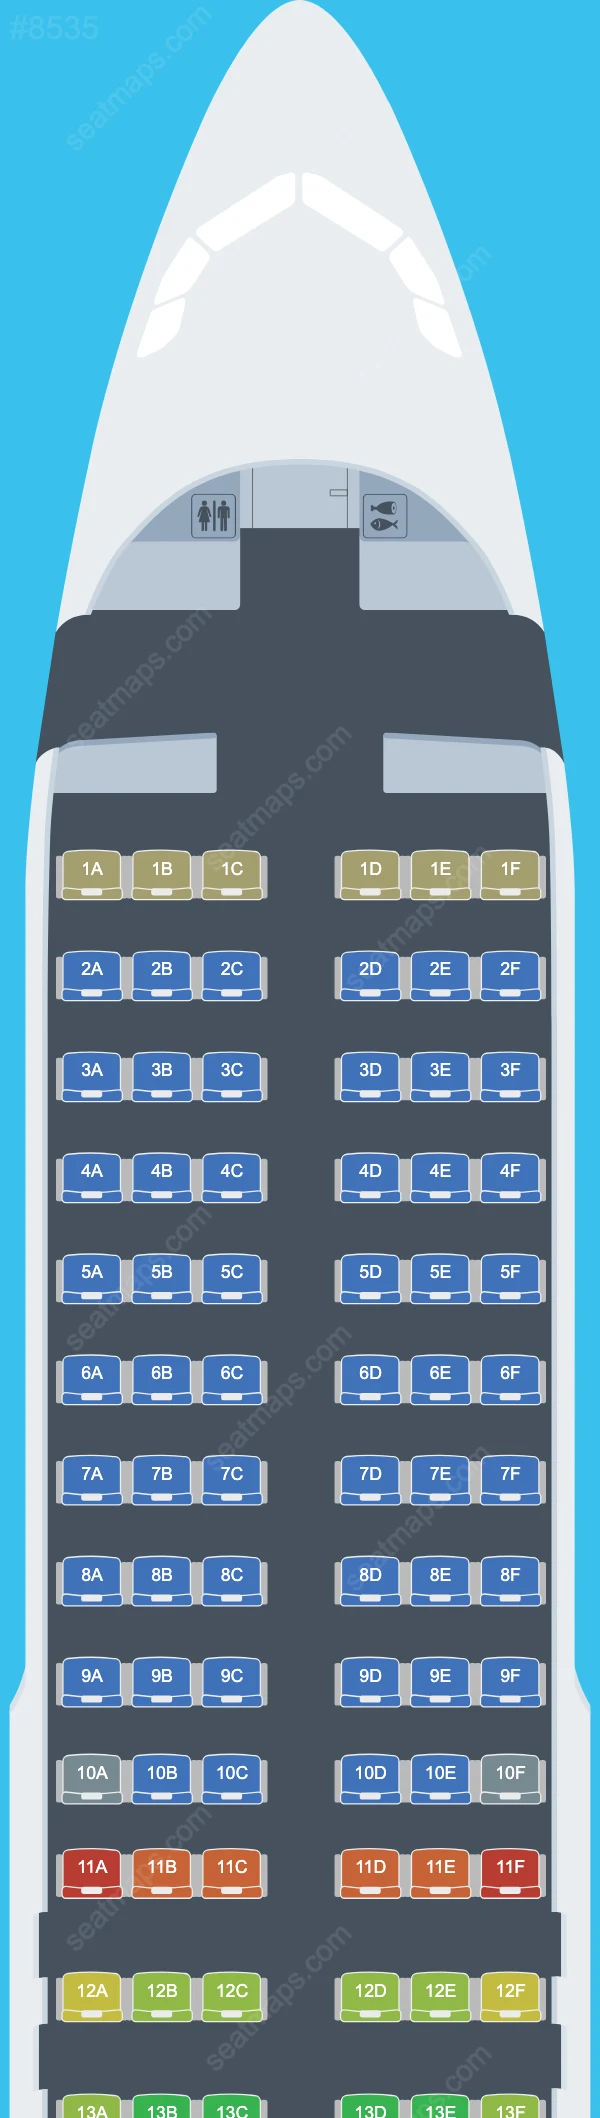 LATAM Airlines Peru Airbus A320 Seat Maps A320-200neo V.2